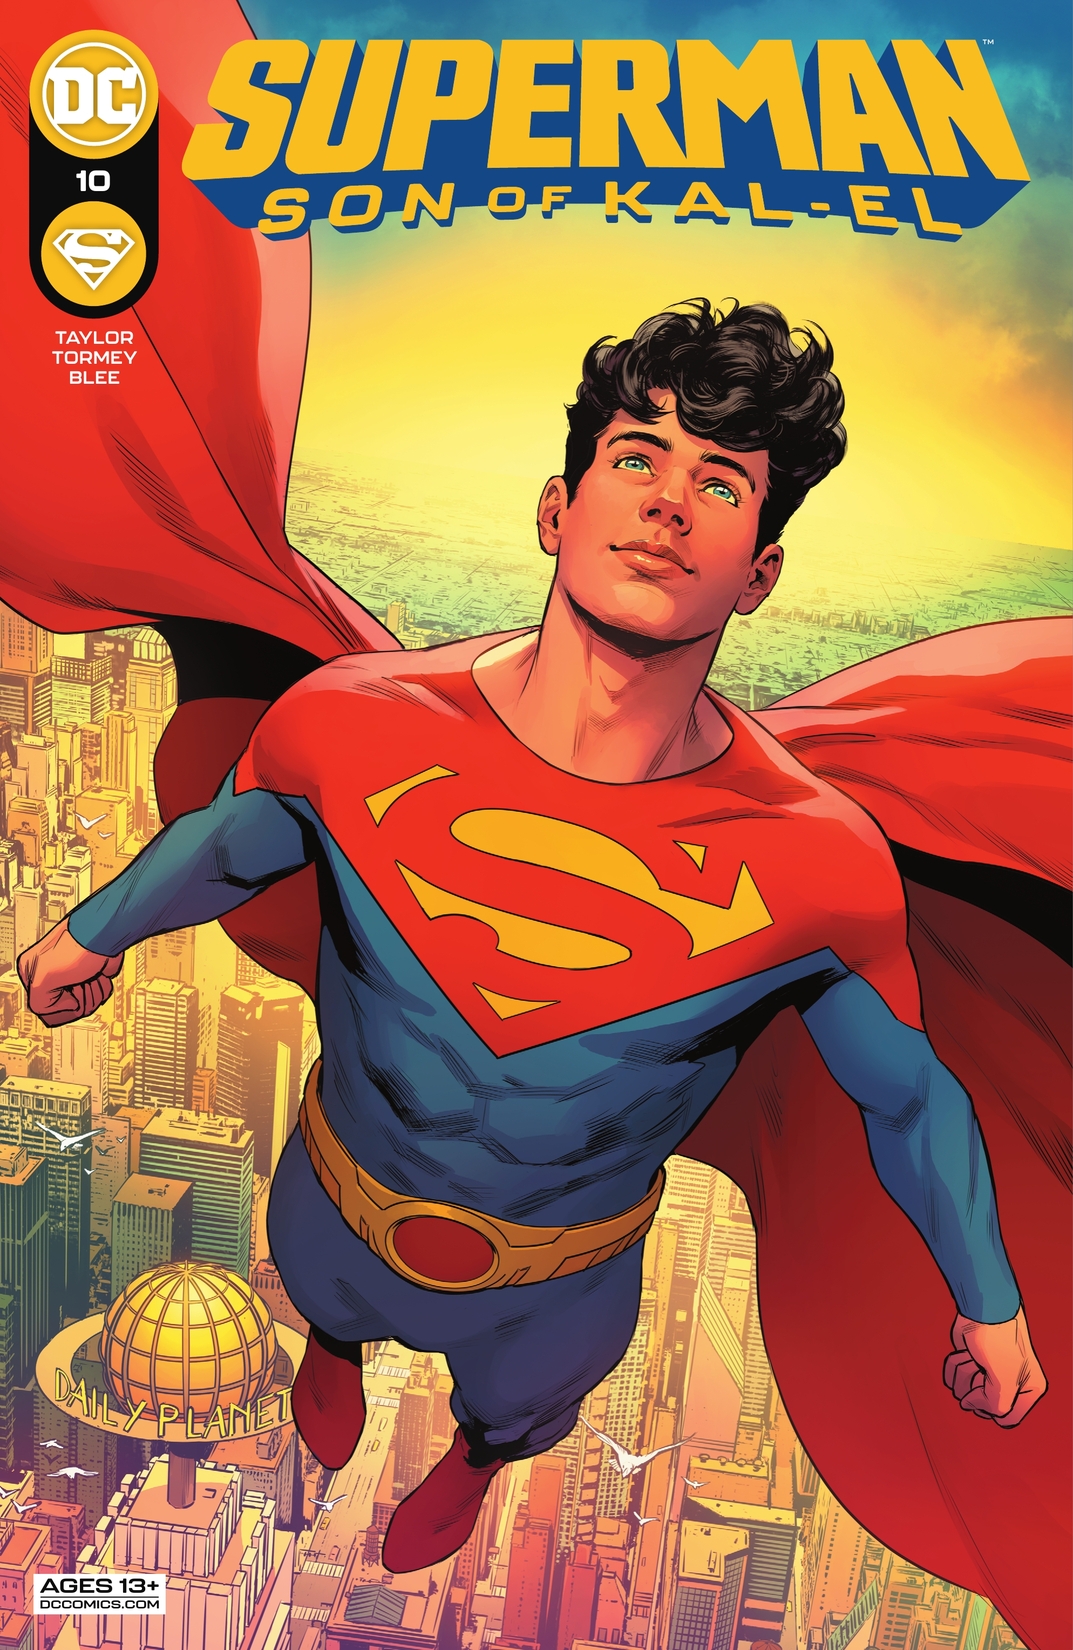 Superman: Son of Kal-El #10 preview images